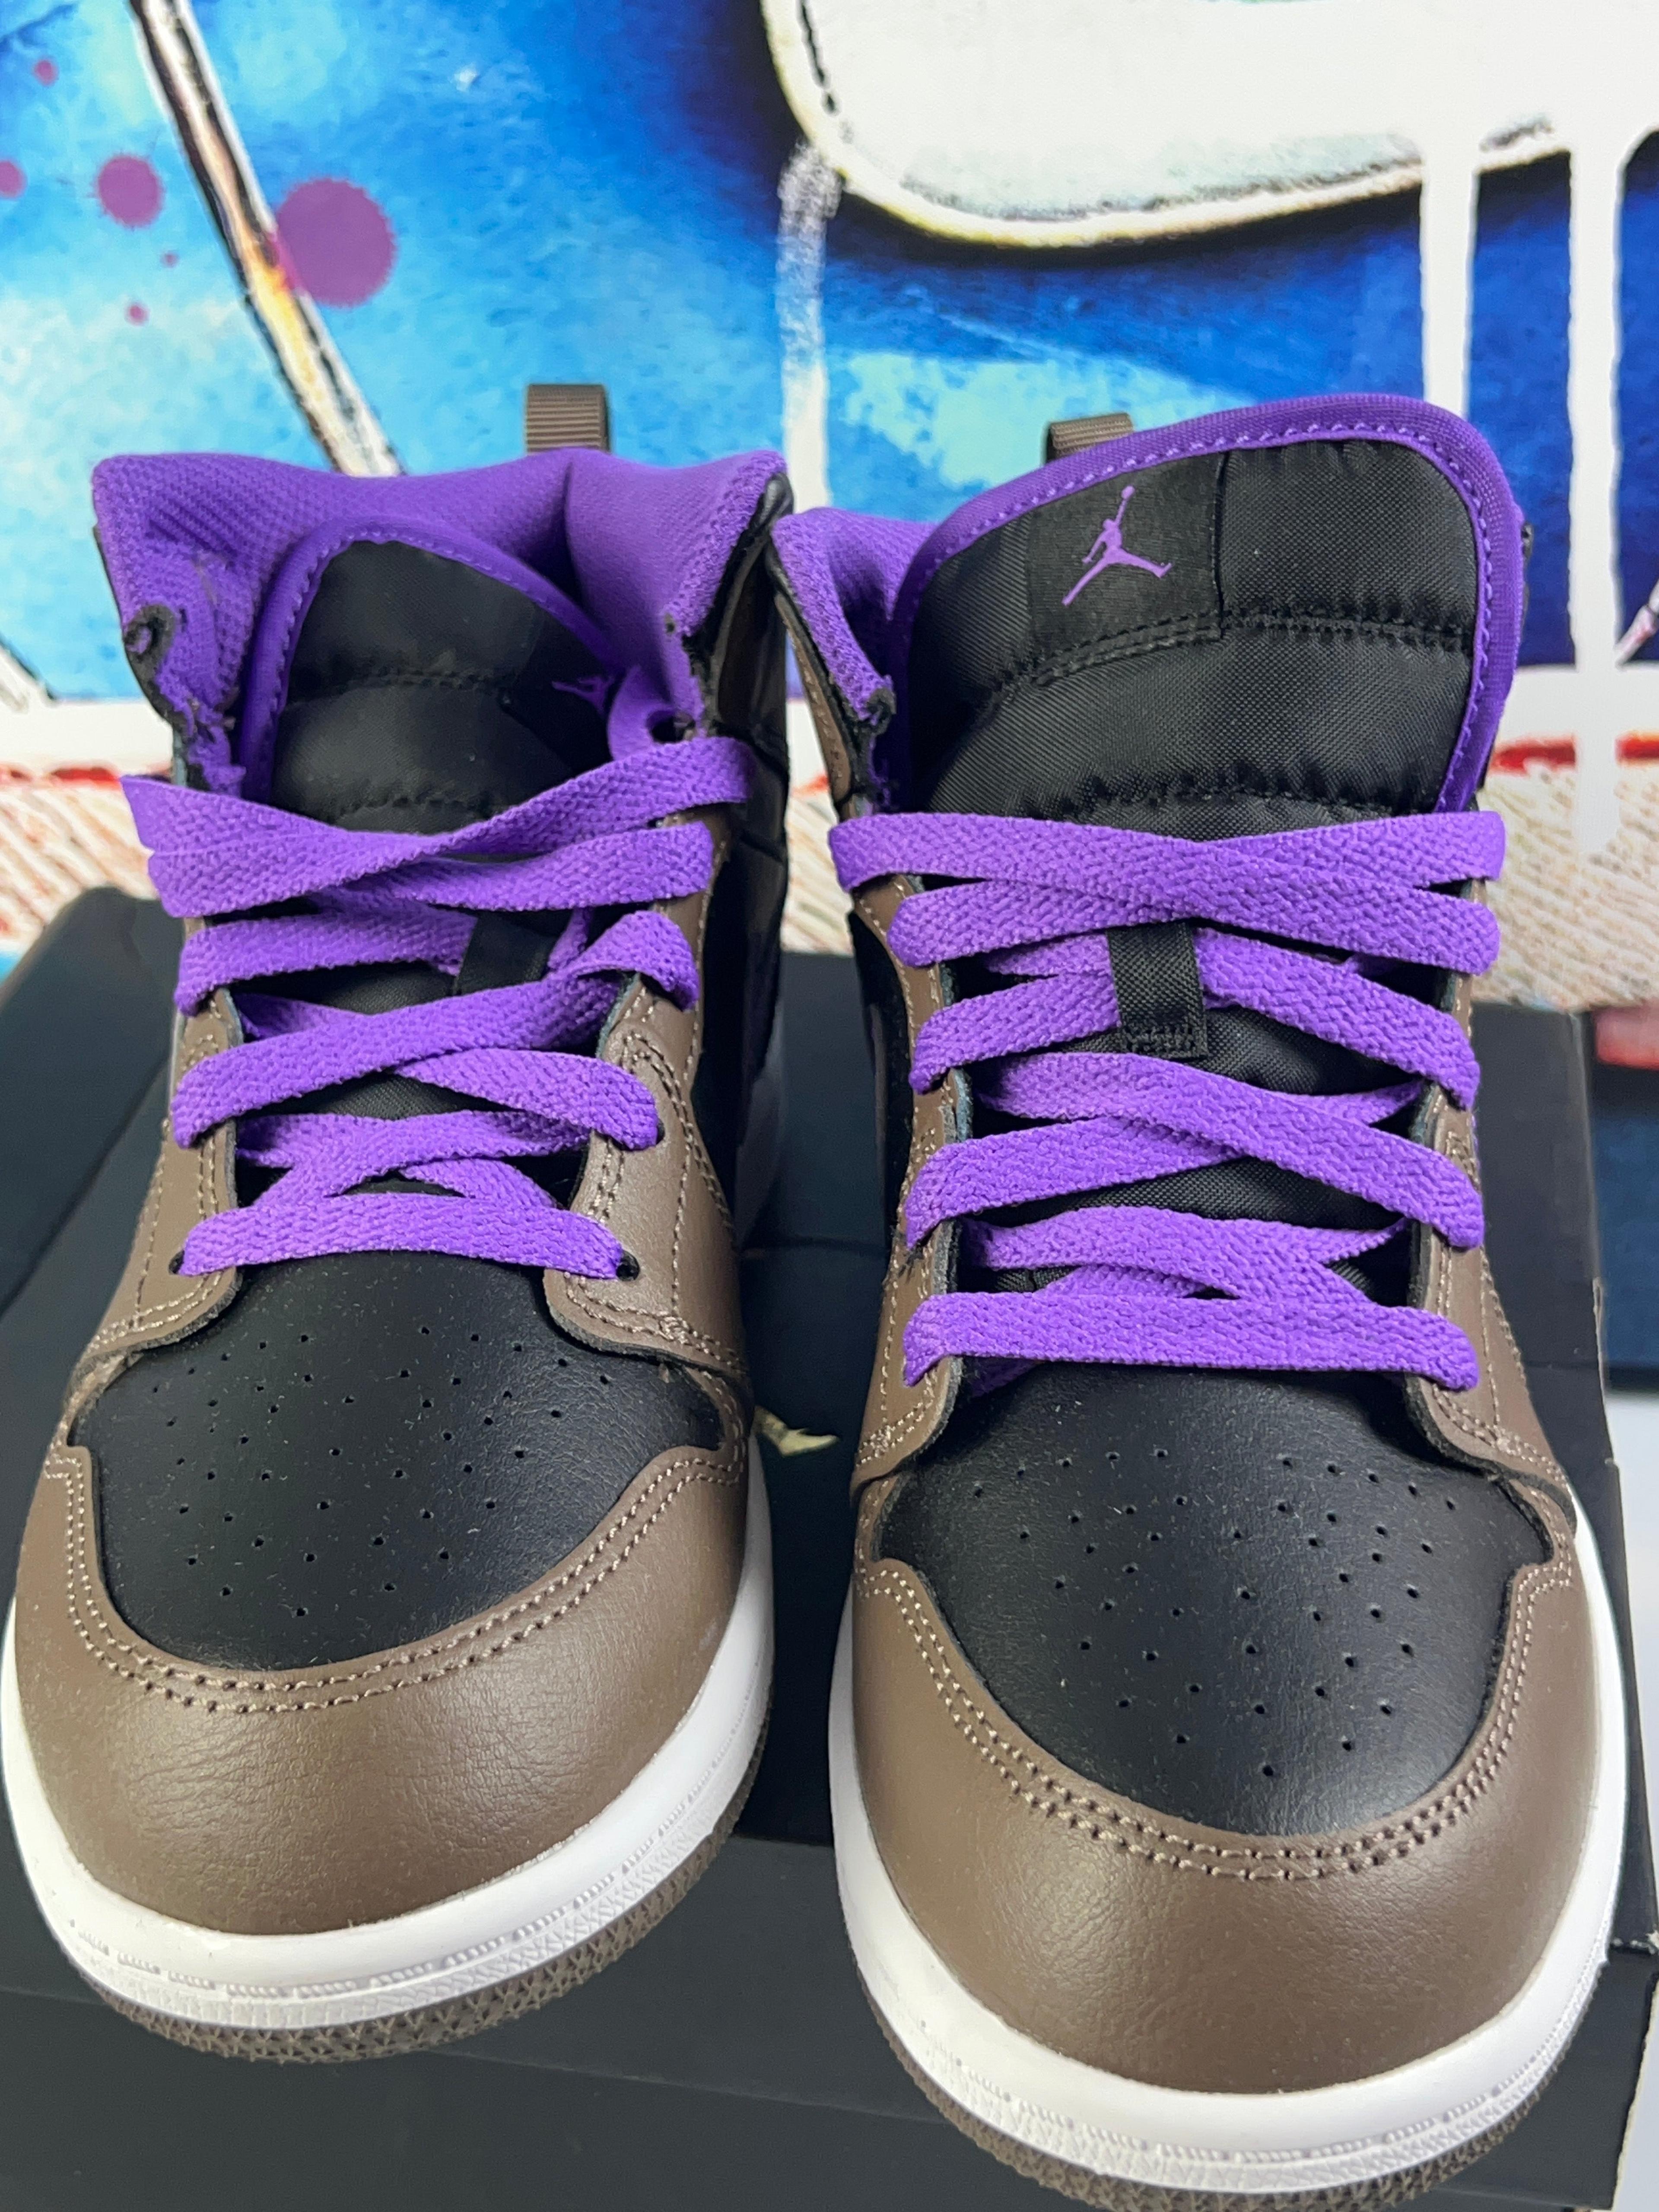 Alternate View 2 of Air Jordan 1 Mid Shoes "Purple Mocha" Palomino Wild Berry DQ8424